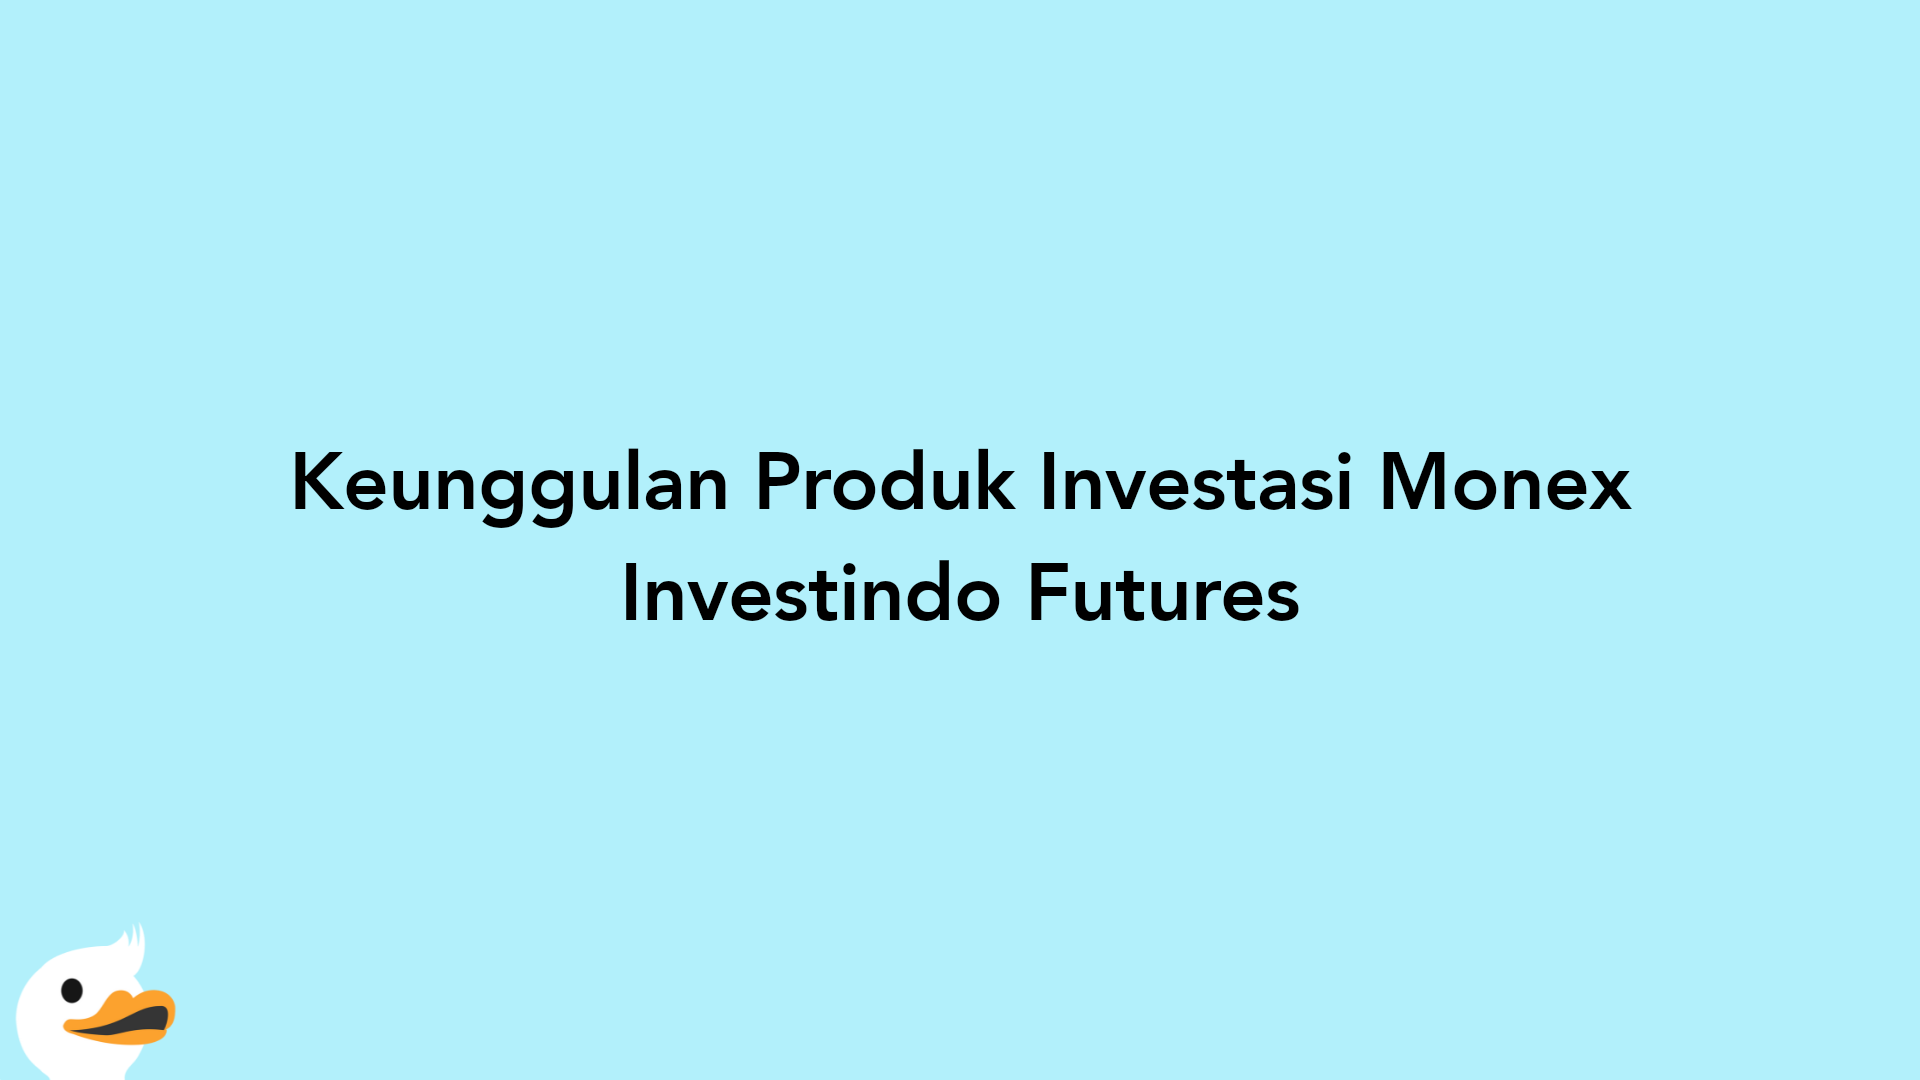 Keunggulan Produk Investasi Monex Investindo Futures